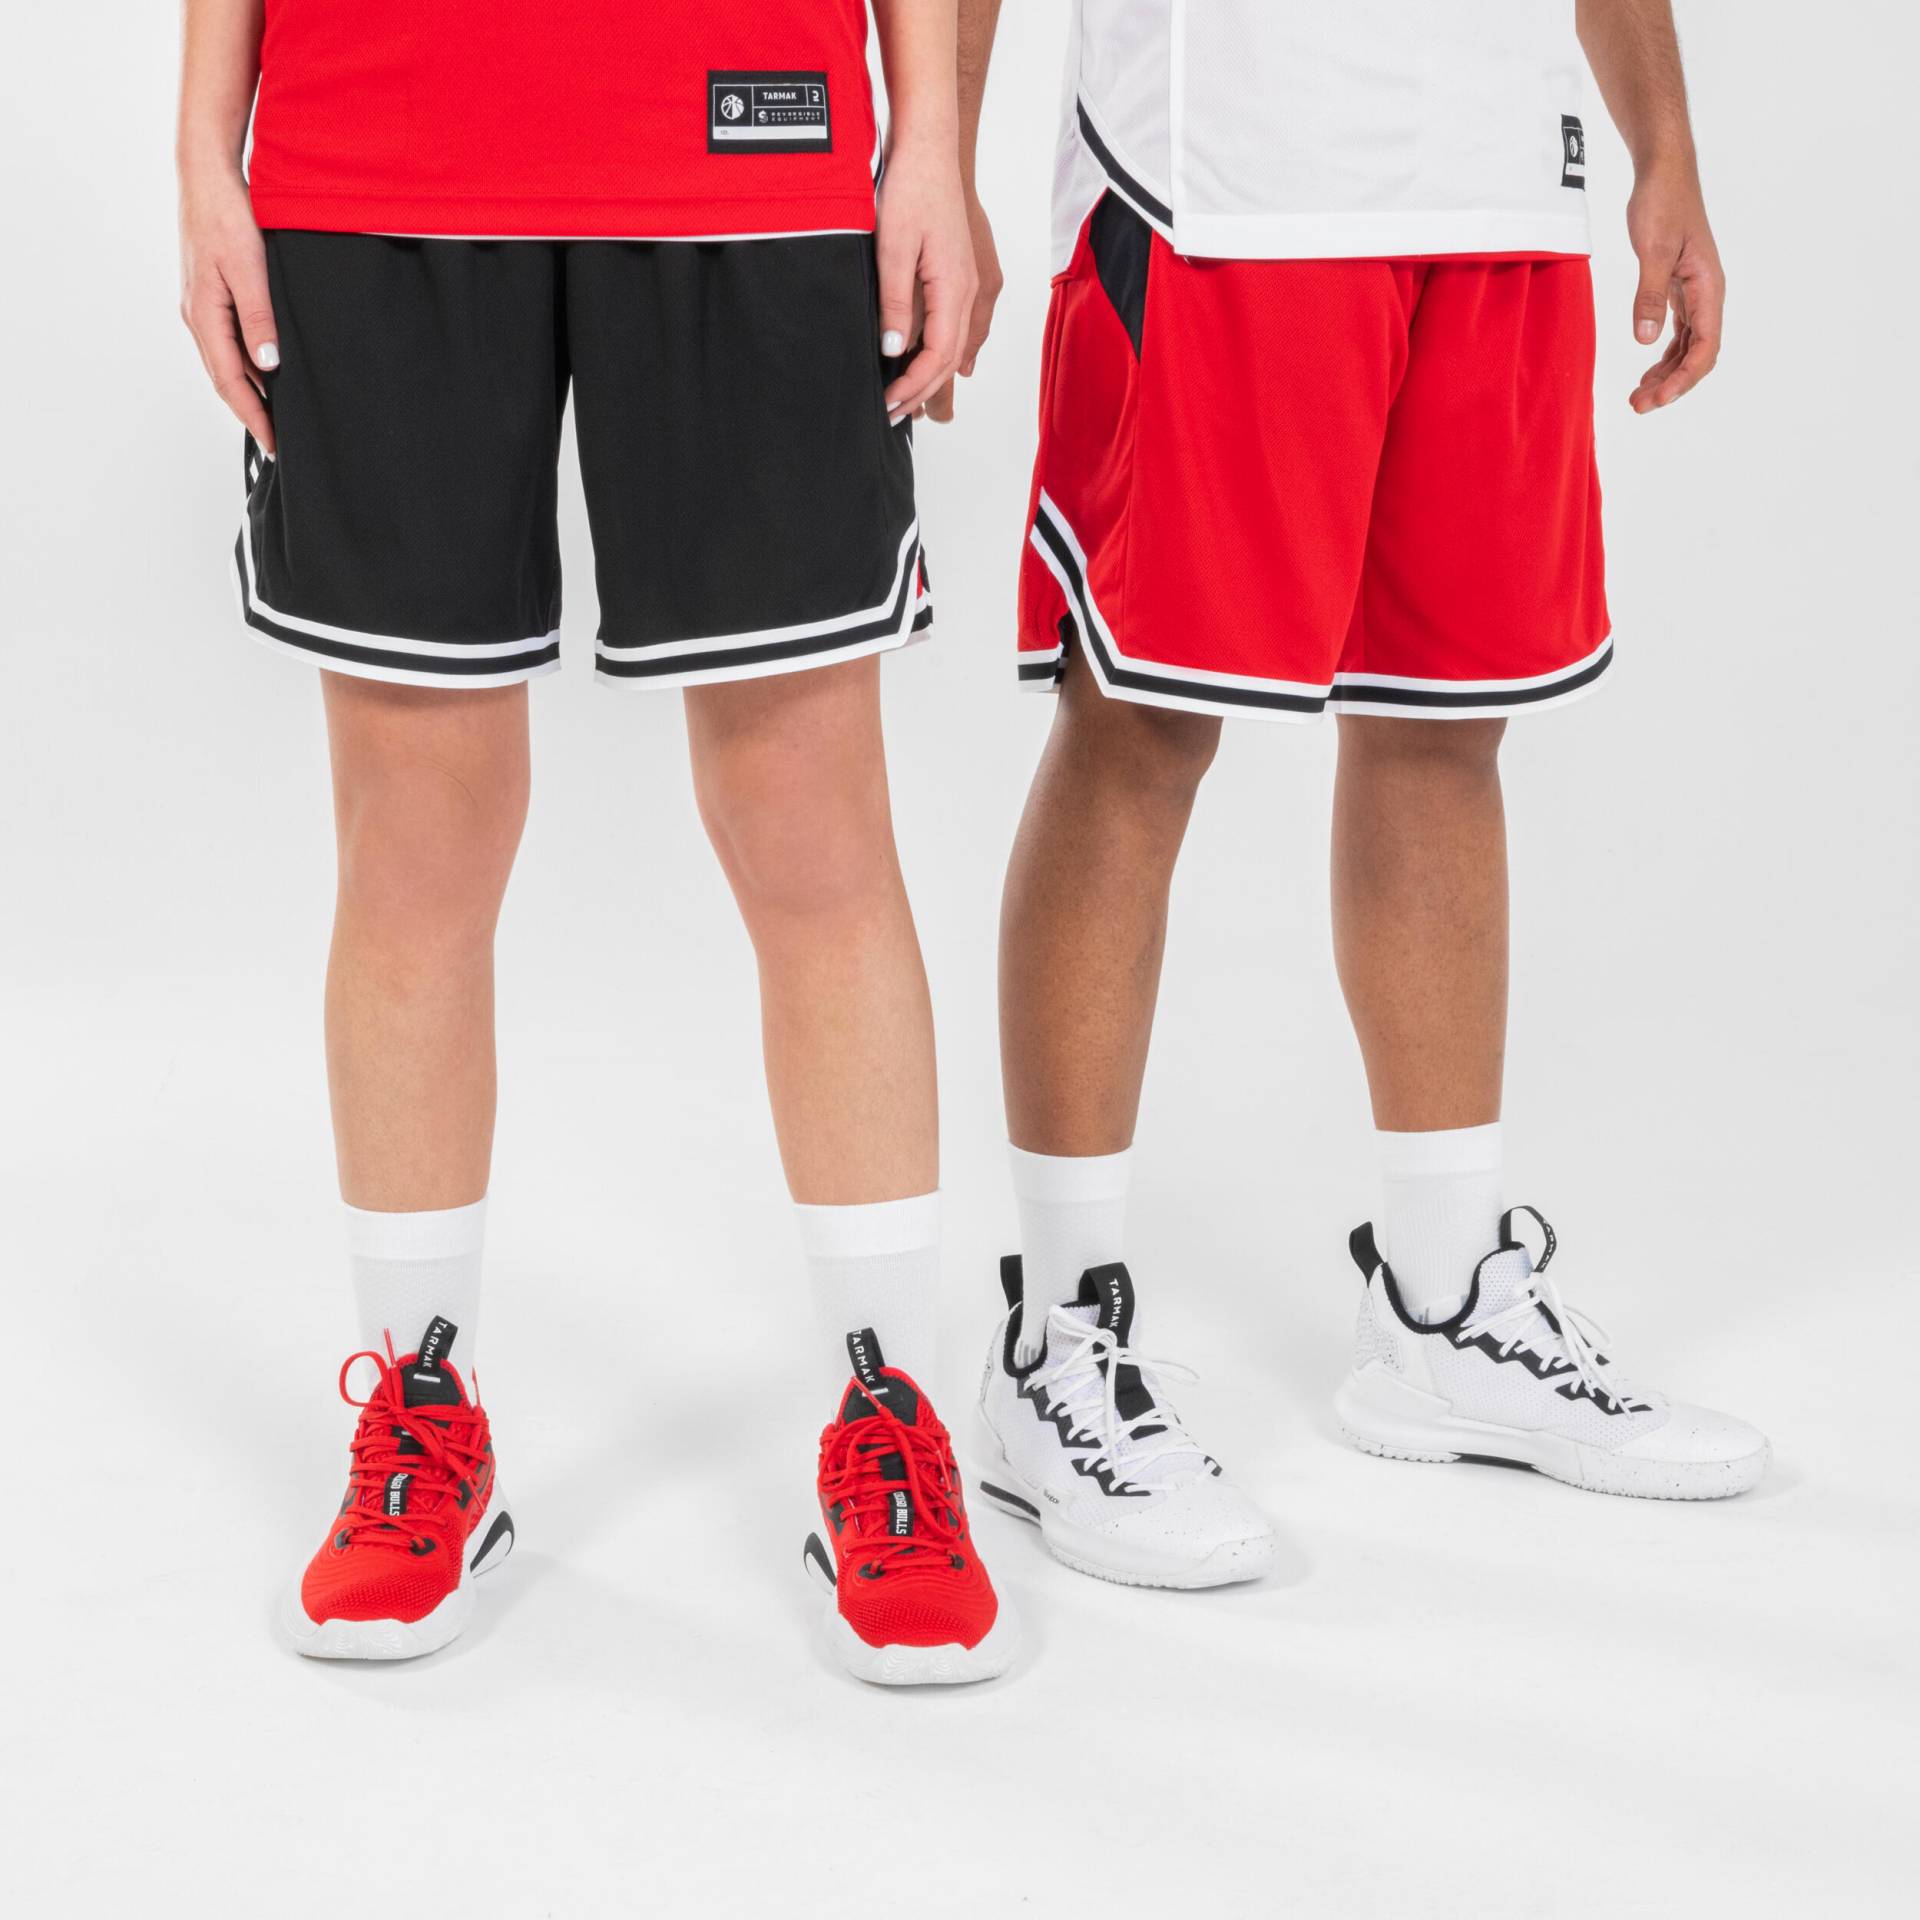 Damen/Herren Basketball Shorts wendbar - SH500R schwarz/rot von TARMAK